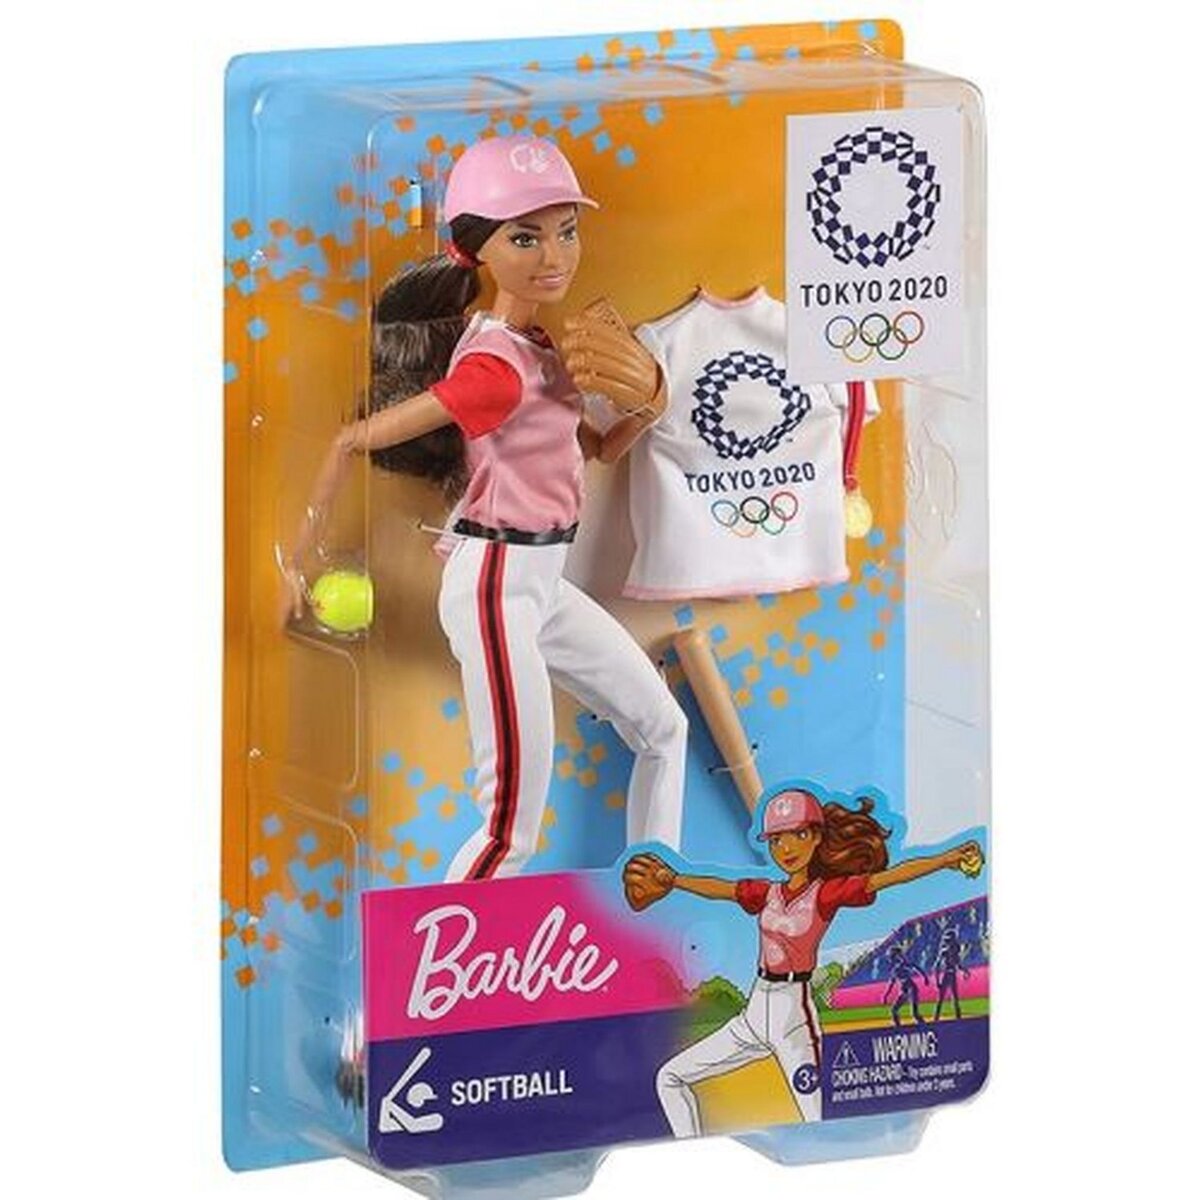 BARBIE Barbie Softball Tokyo JO 2020